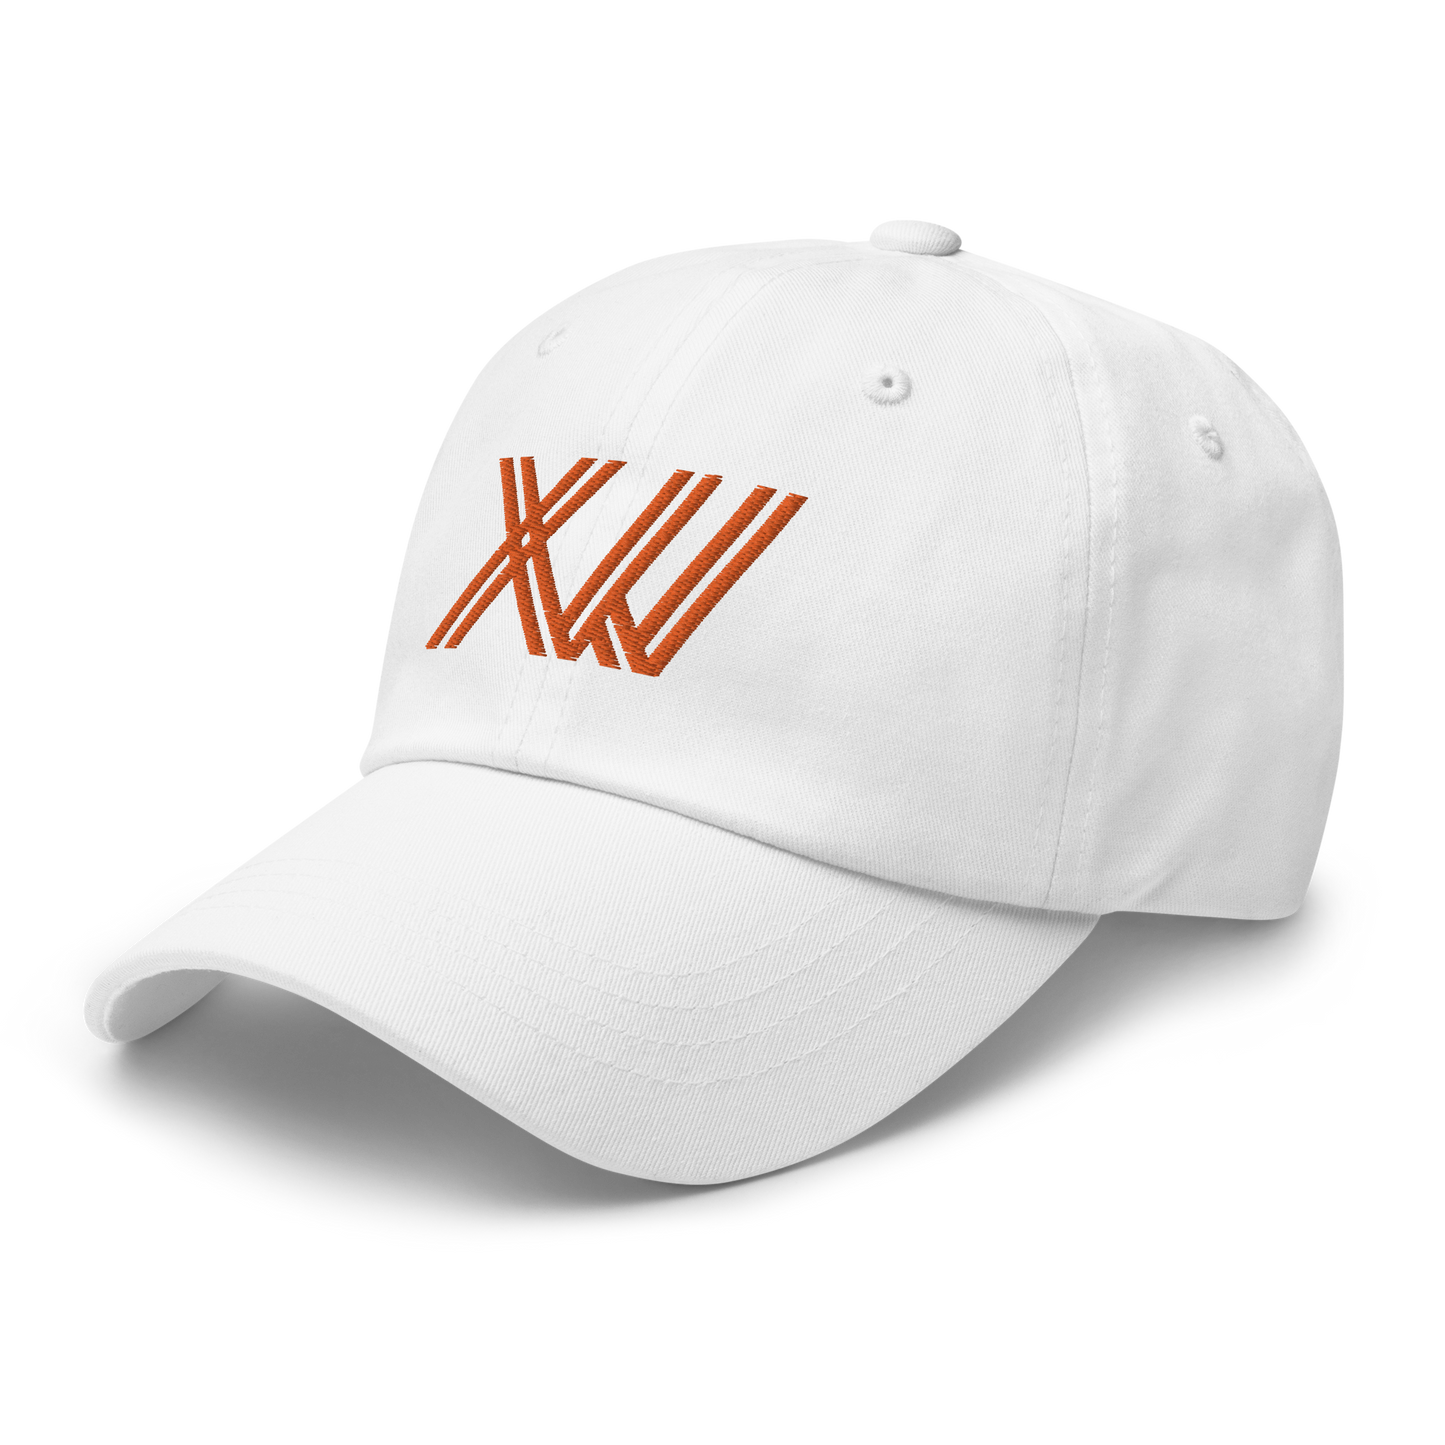 XAVIER WARD PERFORMANCE CAP